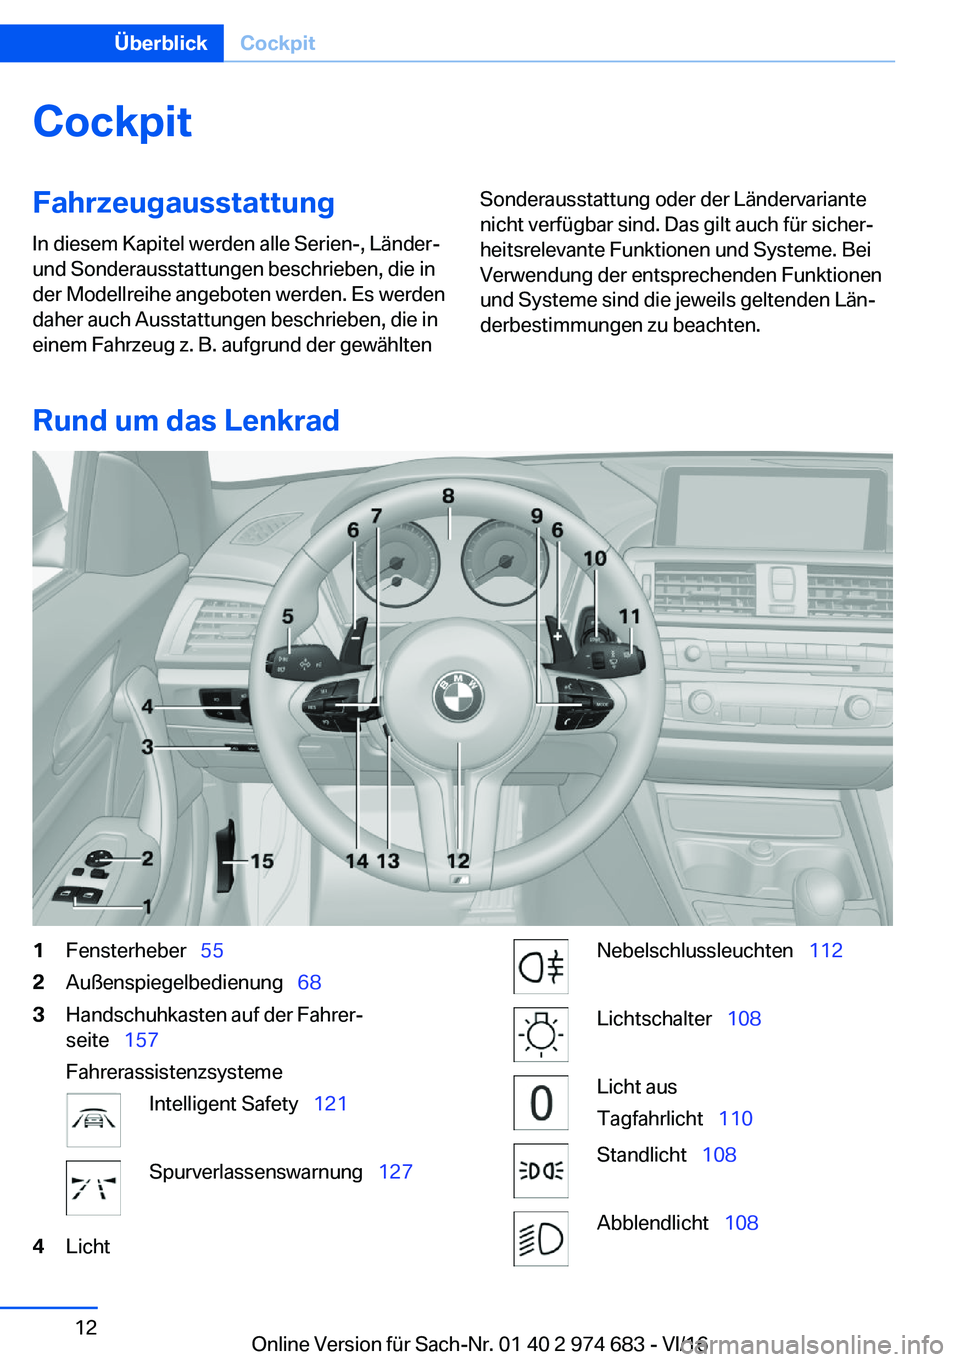 BMW M2 2017  Betriebsanleitungen (in German) �C�o�c�k�p�i�t�F�a�h�r�z�e�u�g�a�u�s�s�t�a�t�t�u�n�g
�I�n� �d�i�e�s�e�m� �K�a�p�i�t�e�l� �w�e�r�d�e�n� �a�l�l�e� �S�e�r�i�e�n�-�,� �L�